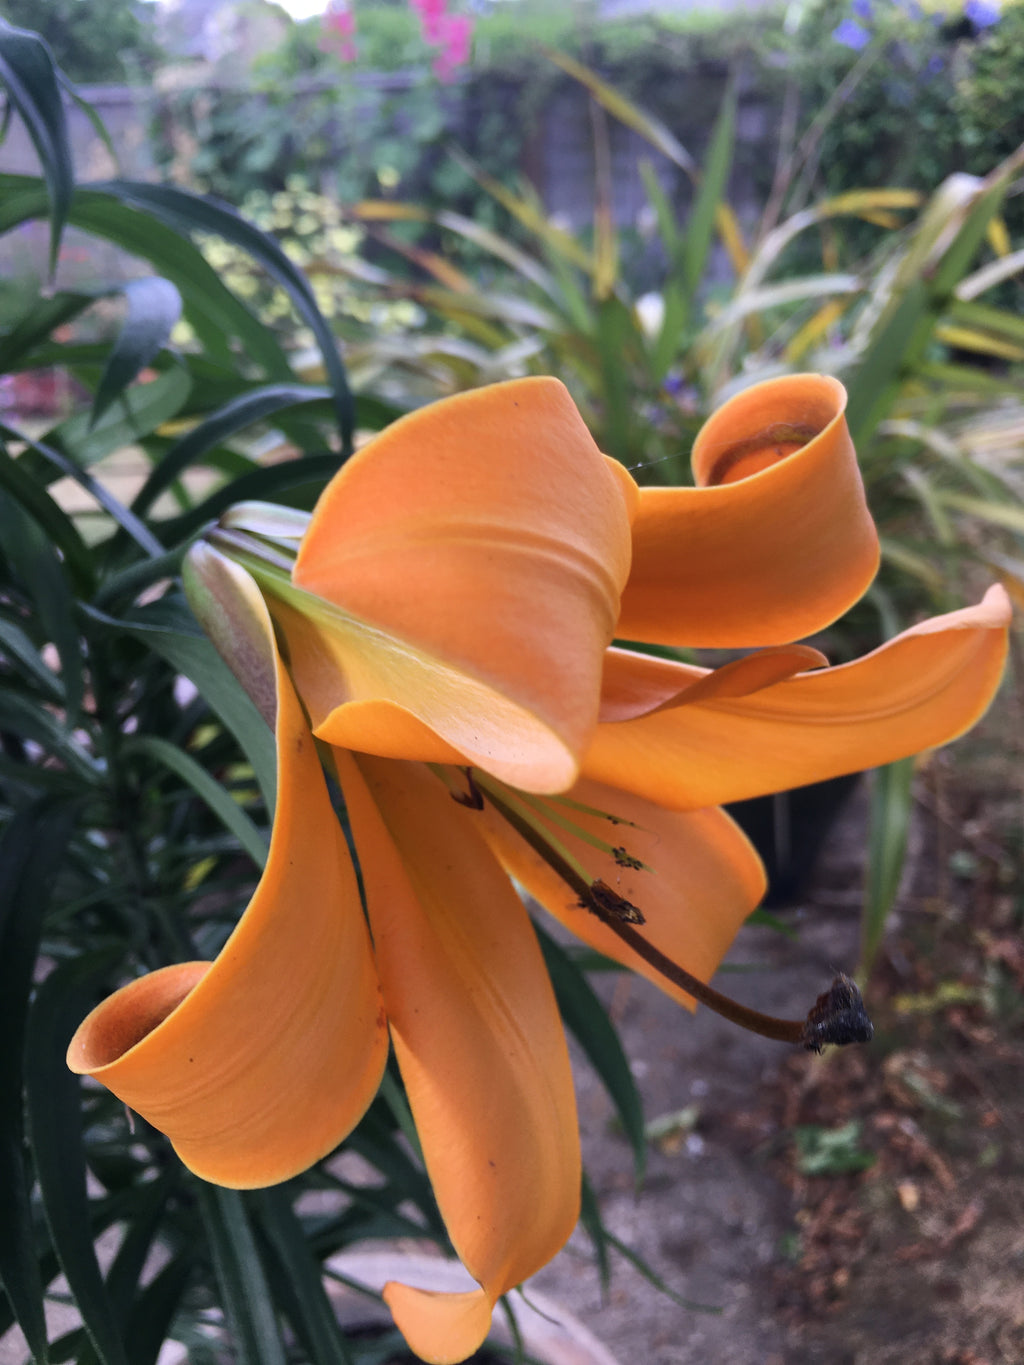 Trumpet Lily 'African Queen' Bulbs (Lilium longiflorum) Free UK postage